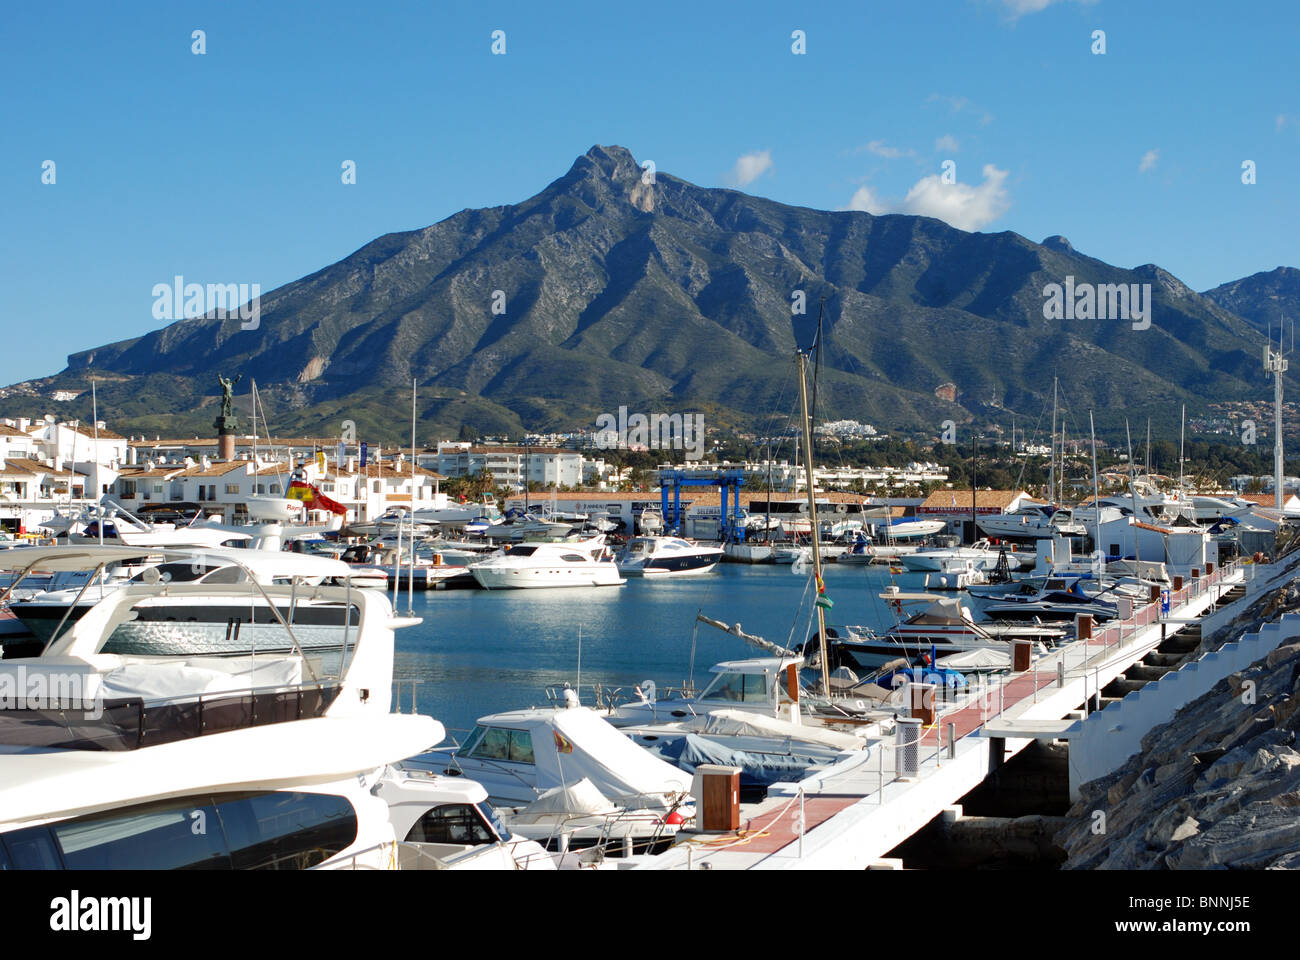 Boats in the harbour, Puerto Banus, Marbella, Costa del Sol, Malaga Province, Andalucia, Spain, Western Europe. Stock Photo